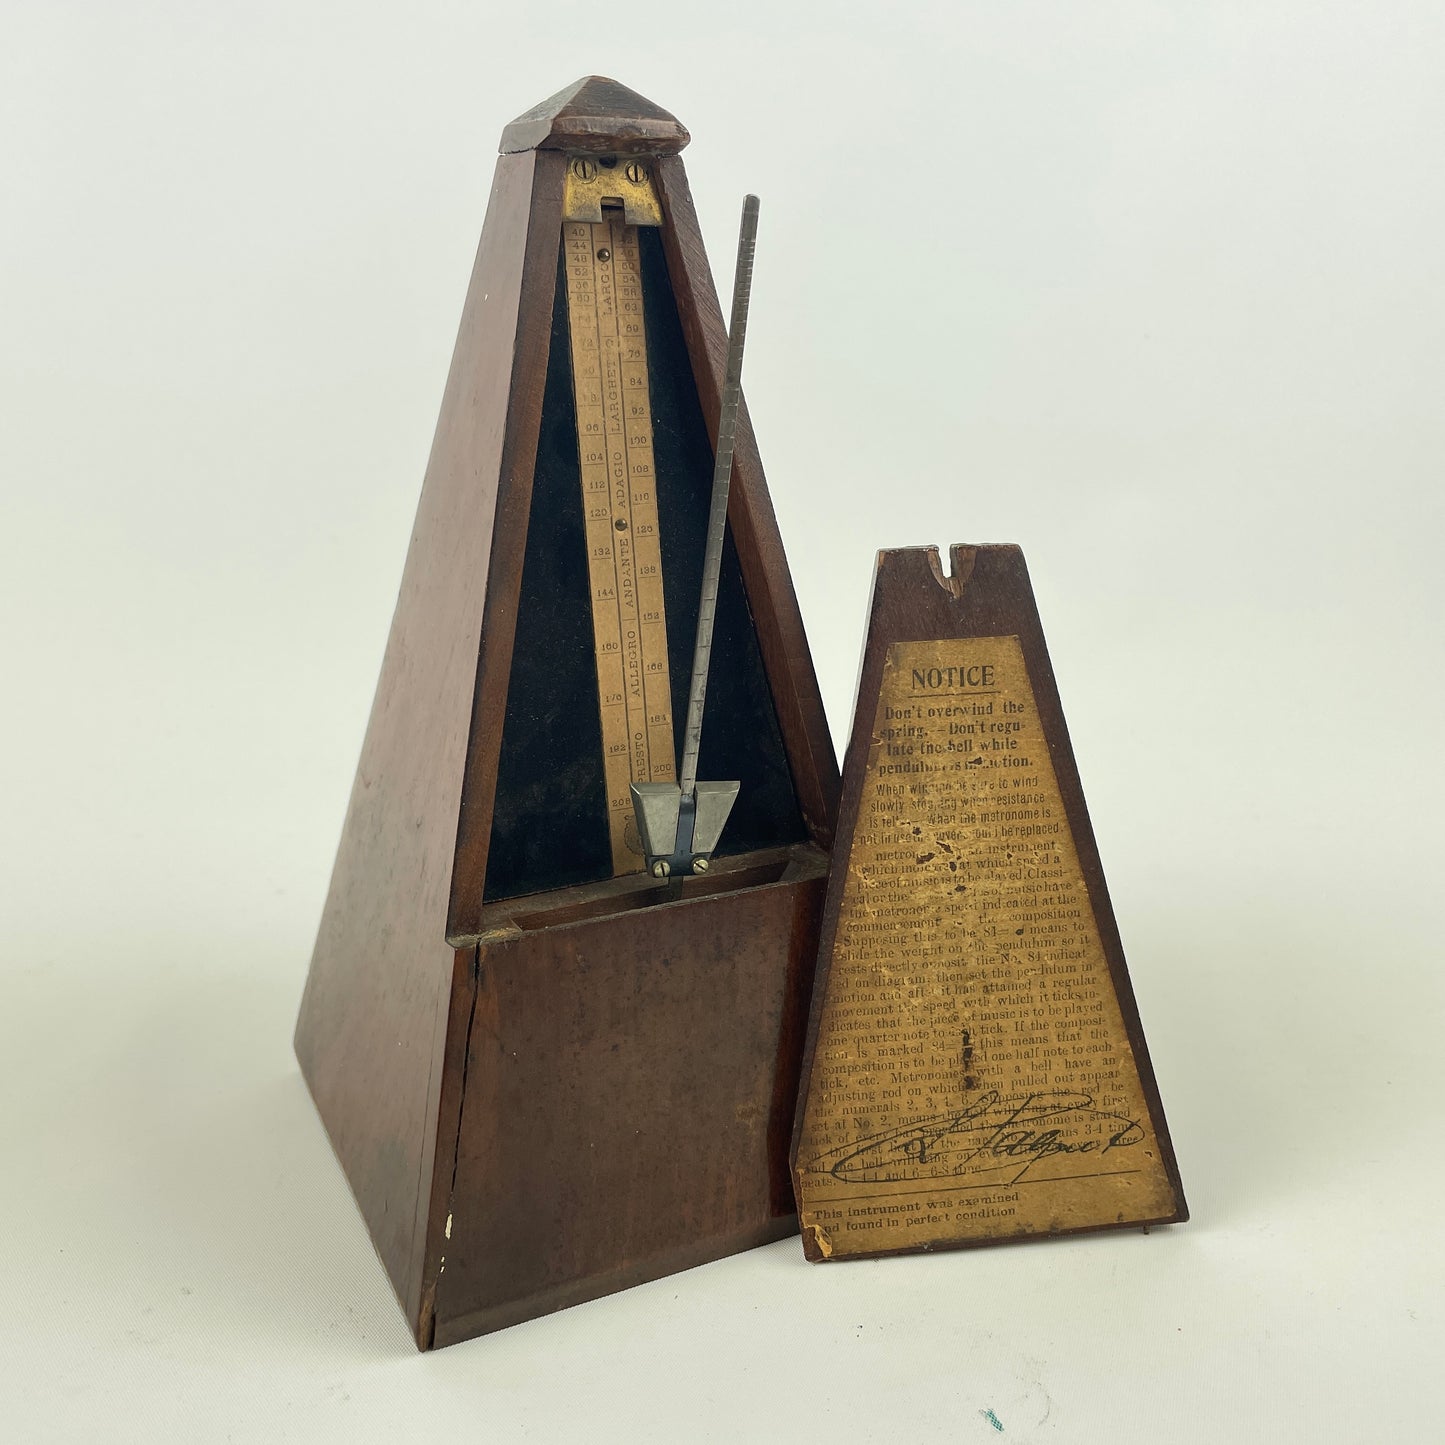 Jan Lot 128- Vintage Mechanical Metronome